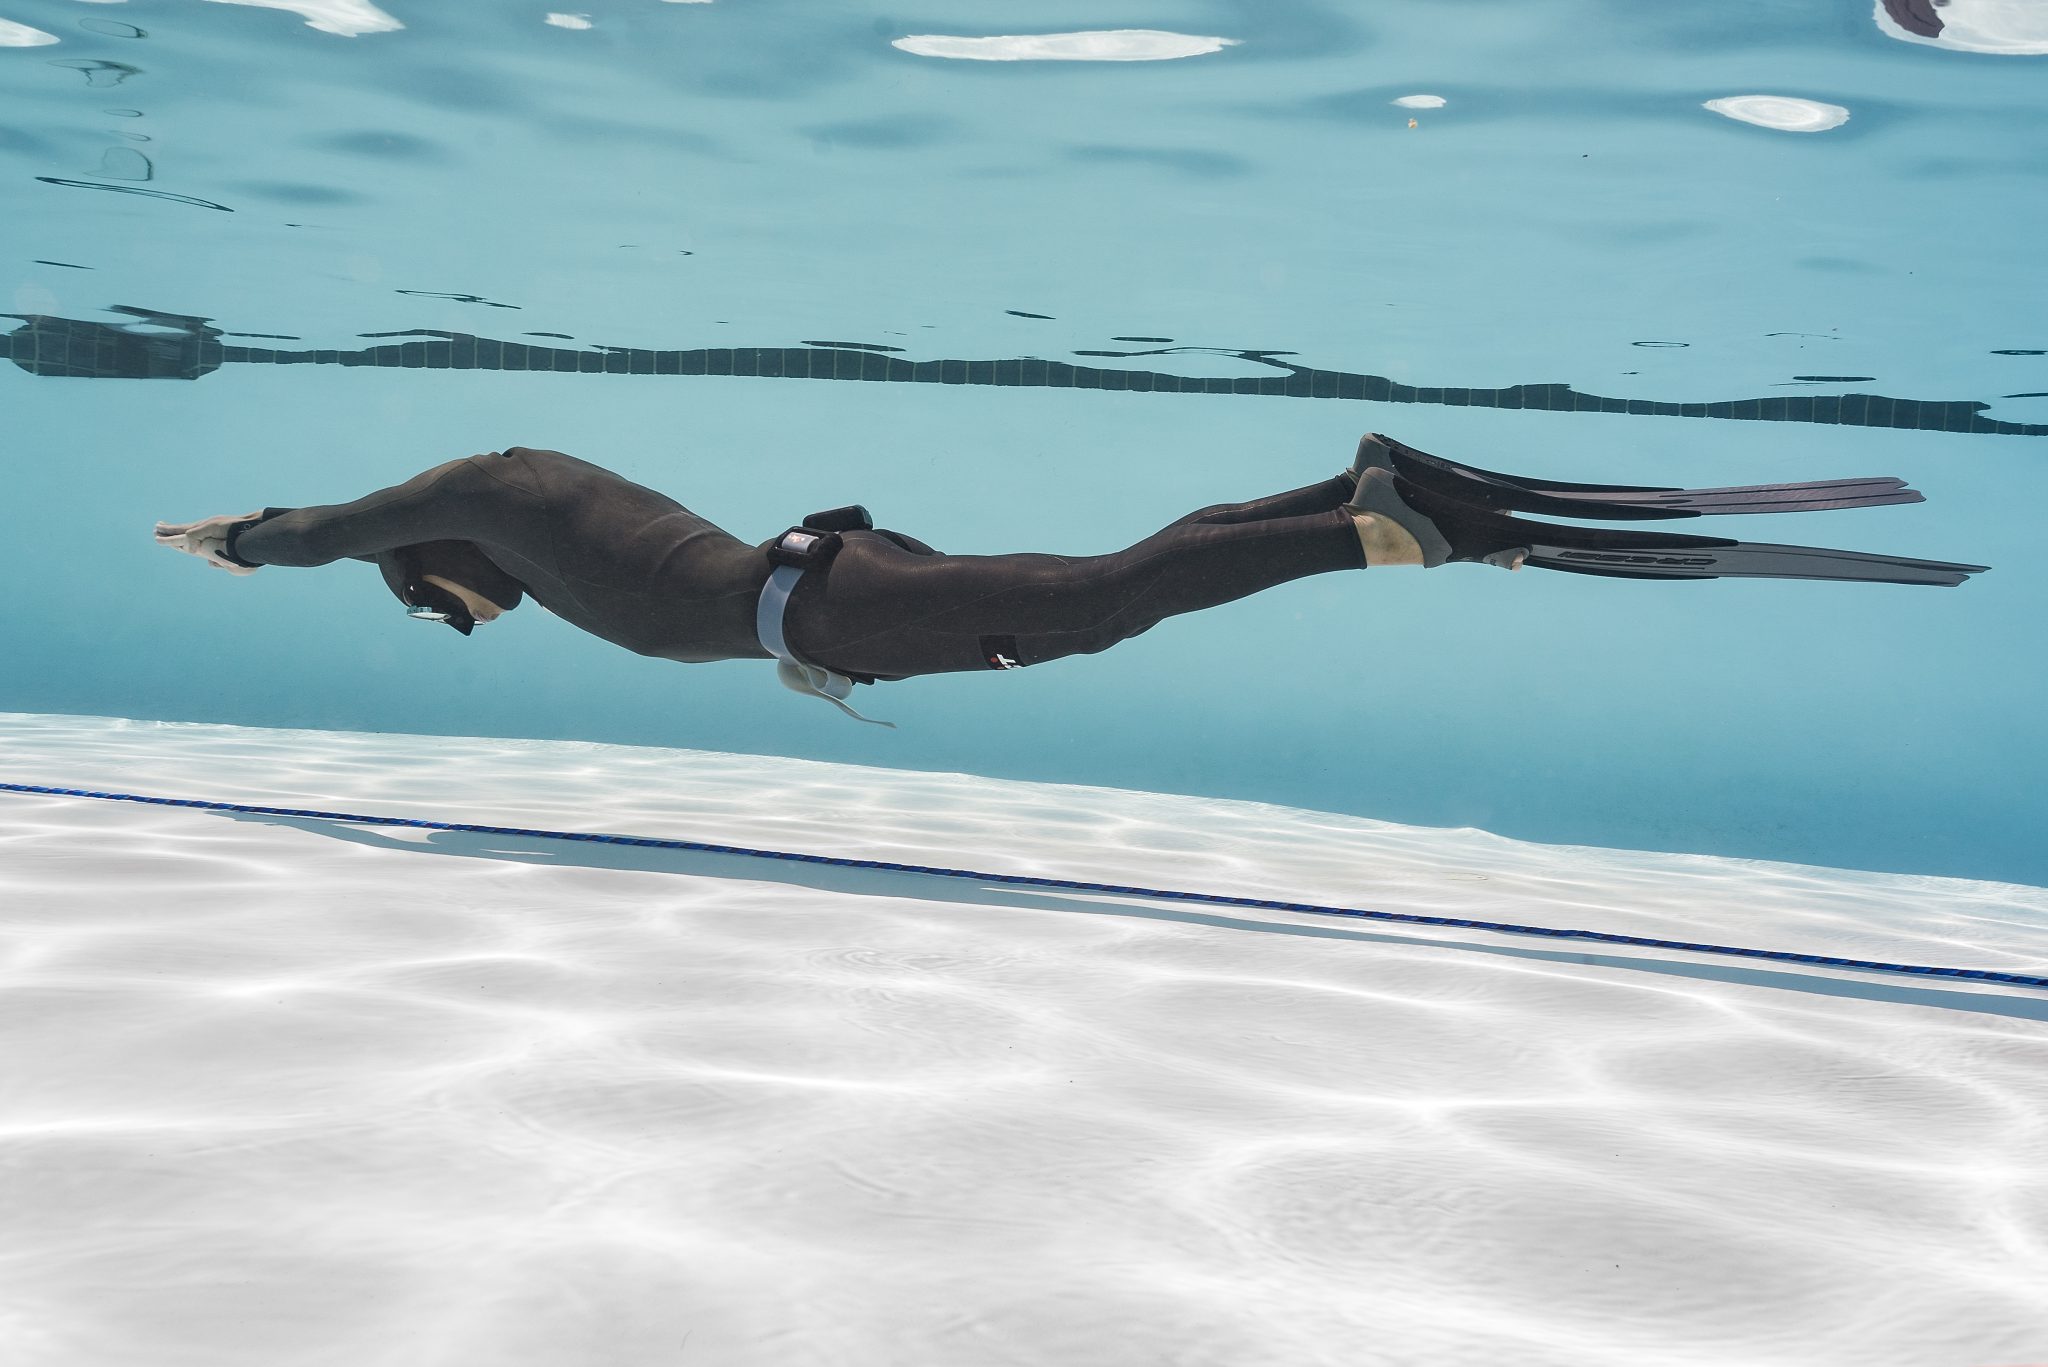 a freediver doing dynamic apnea in the pool